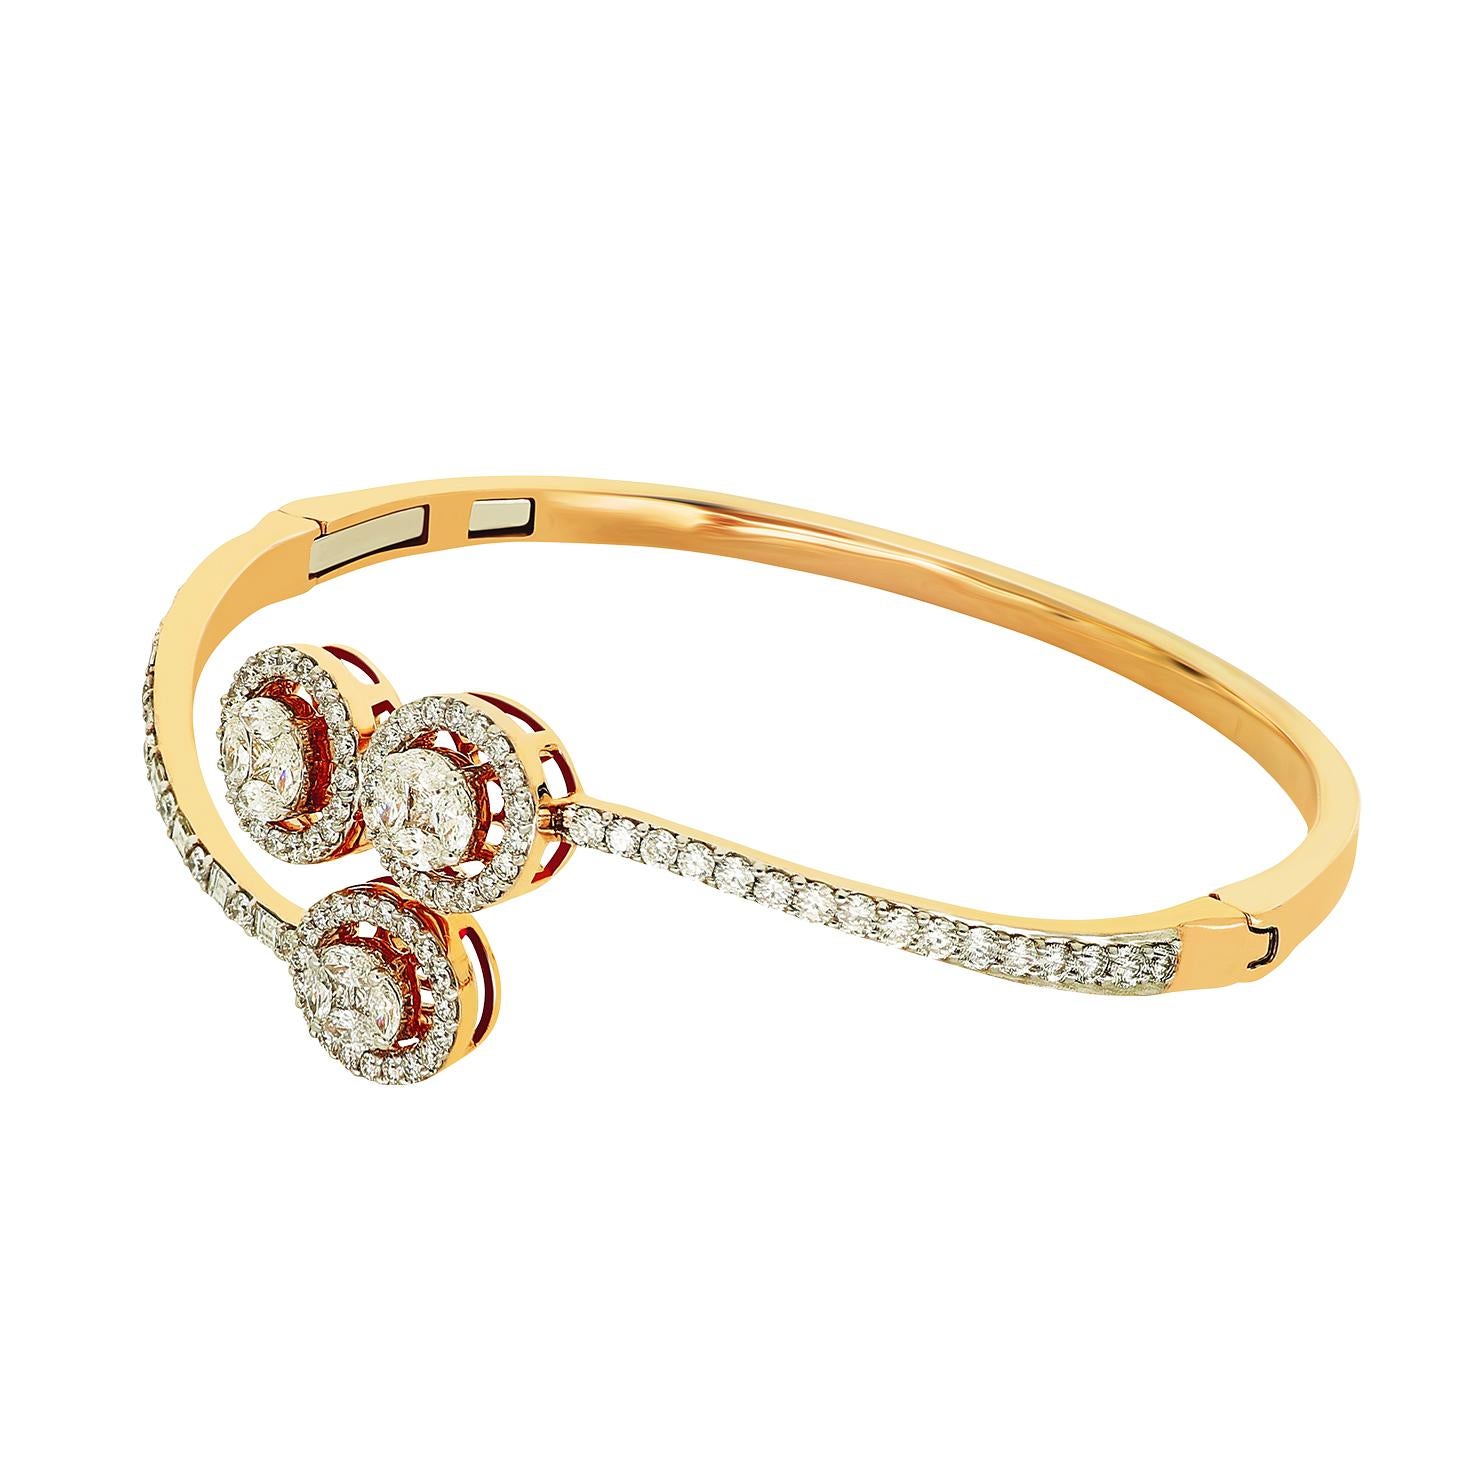 2.25ct 18ct rose gold tennis bracelet guaranteed g/h colour si purity natural diamonds